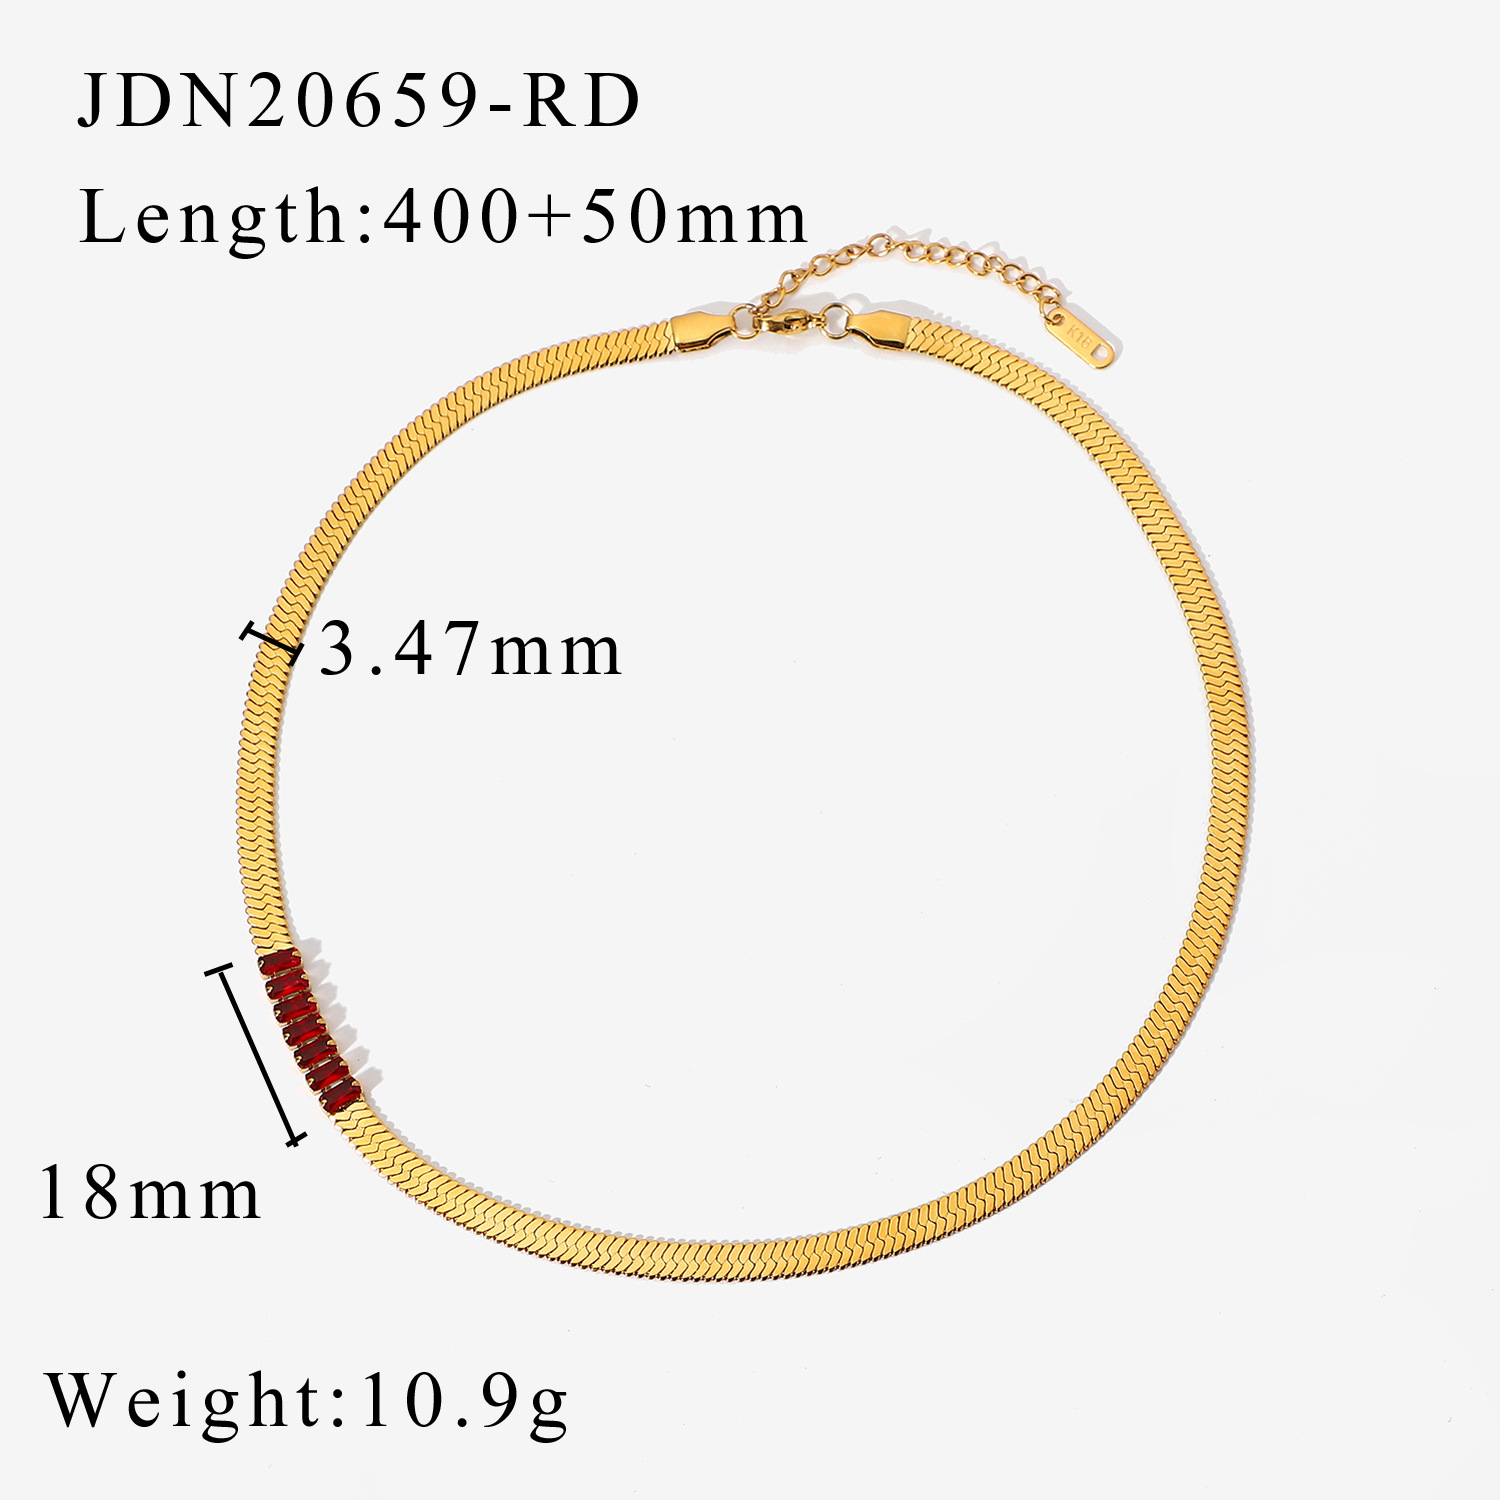 1:JDN20659-RD